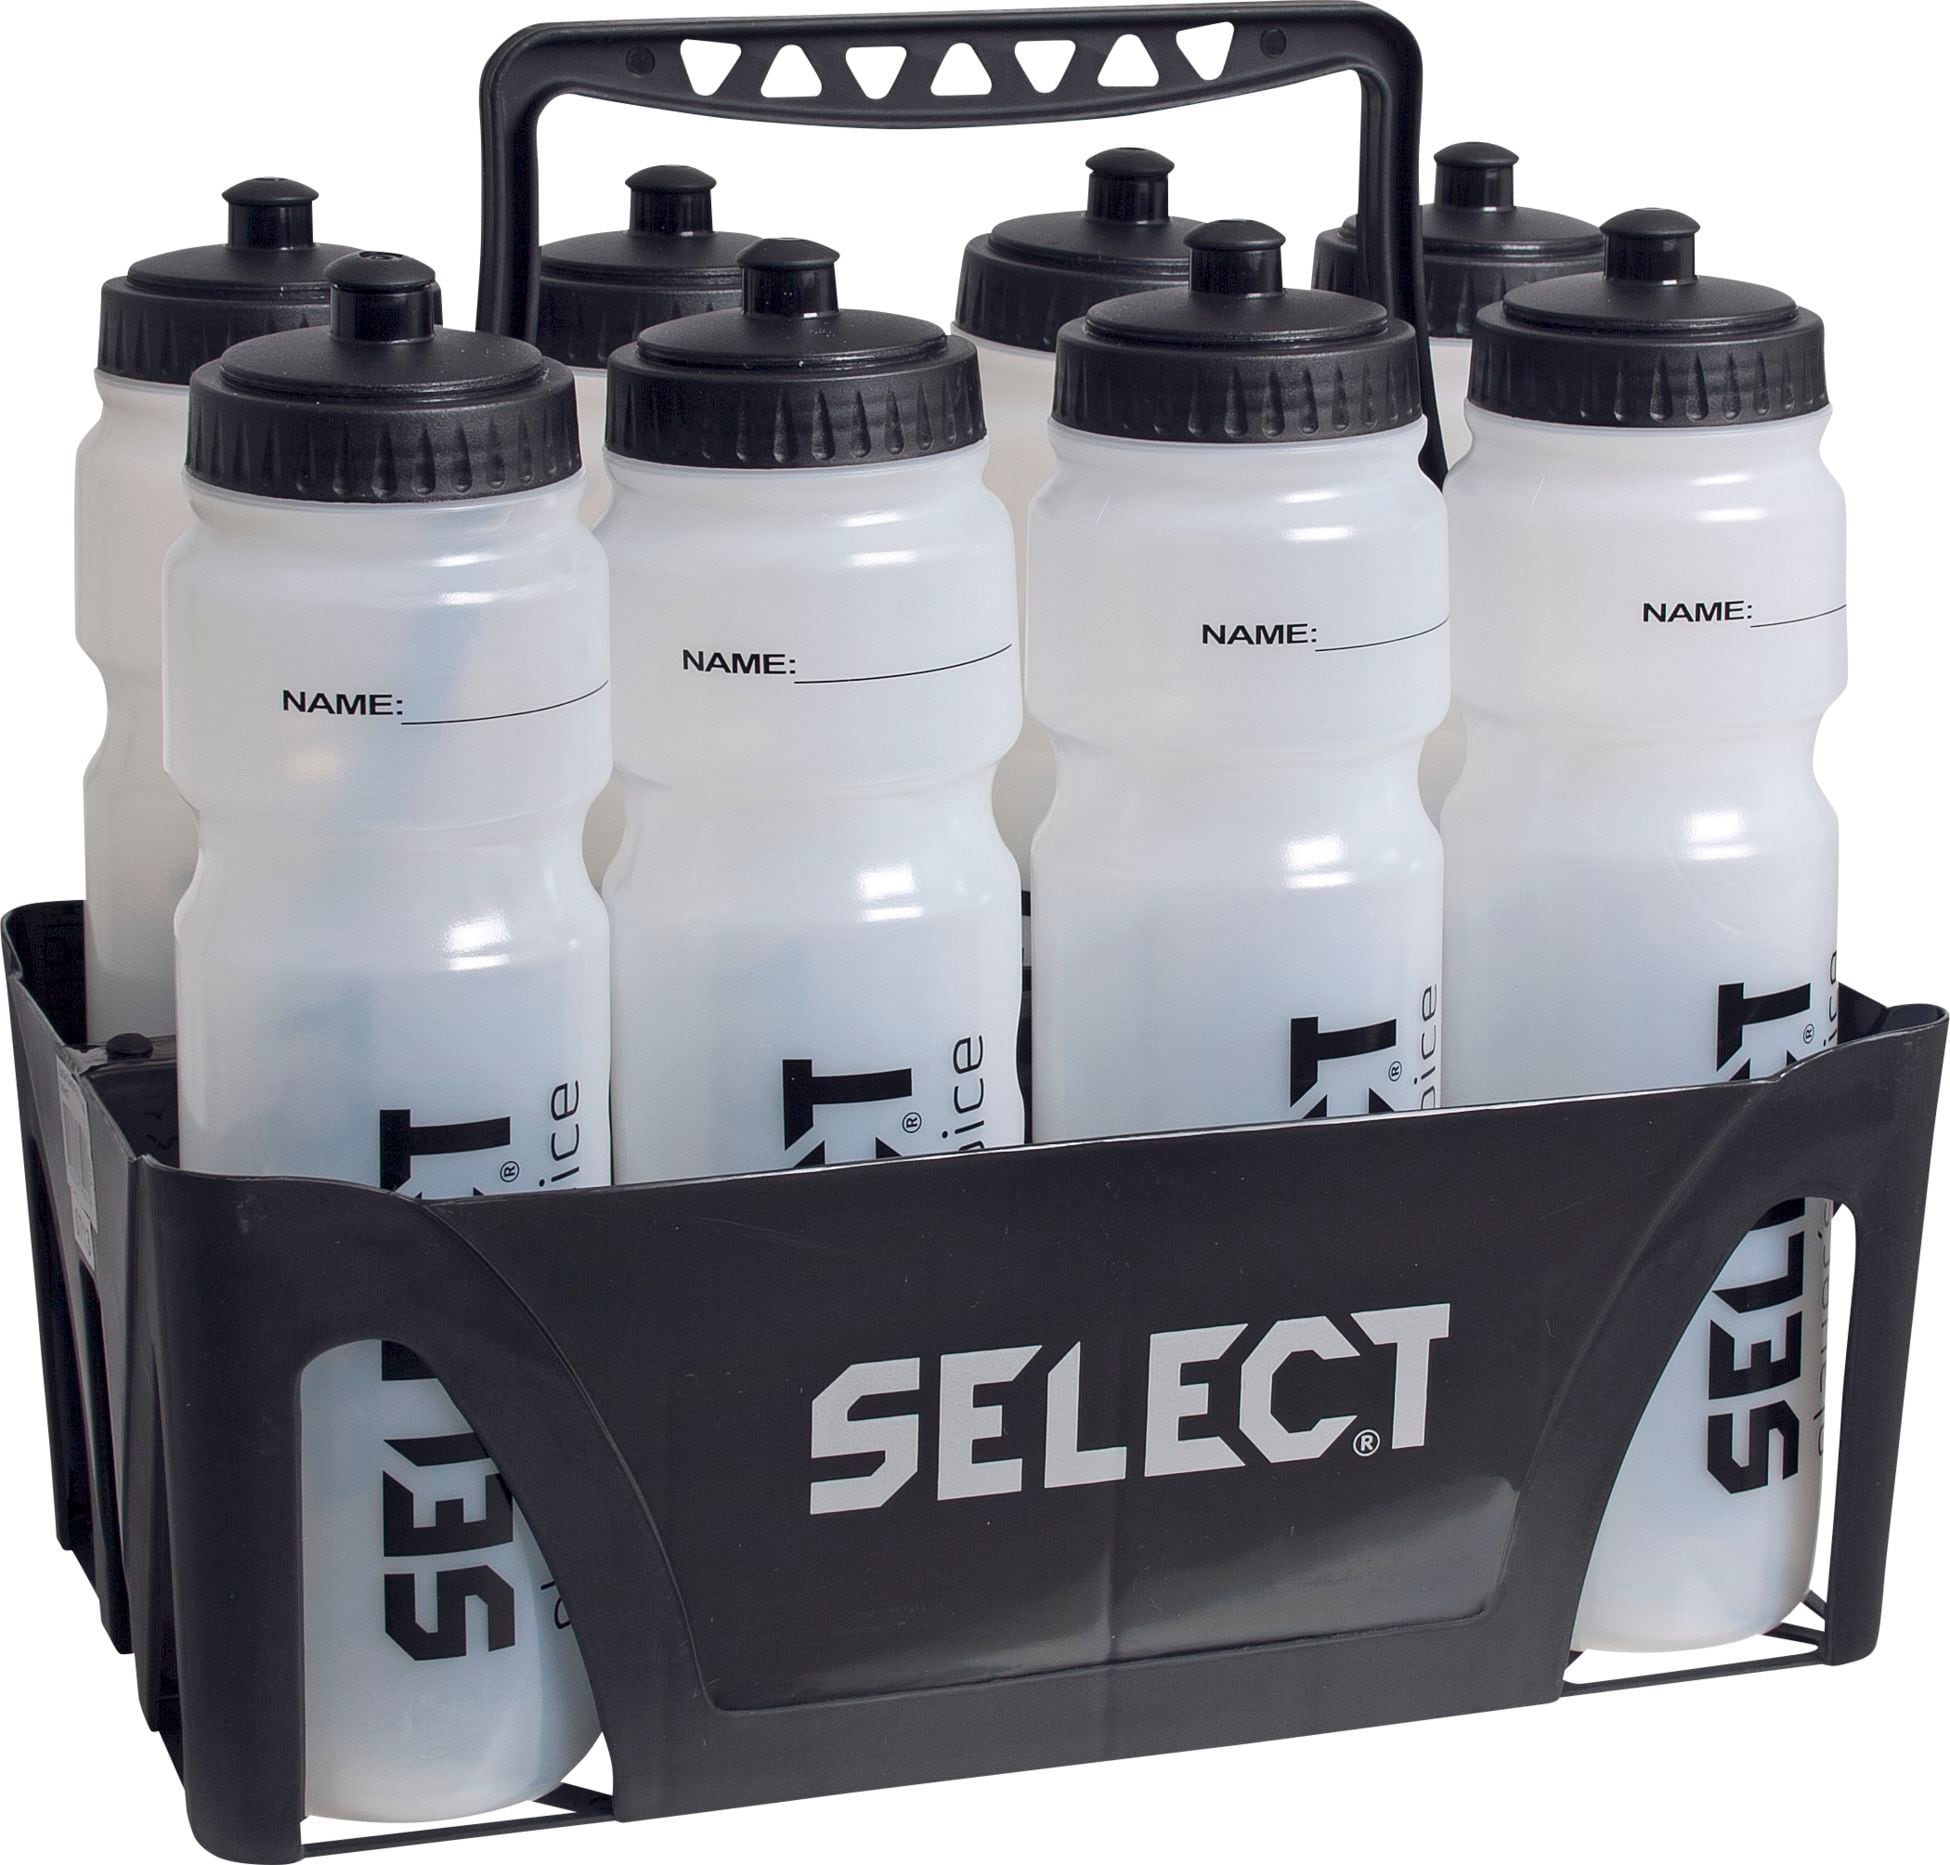 SELECT, Bottle Carrier